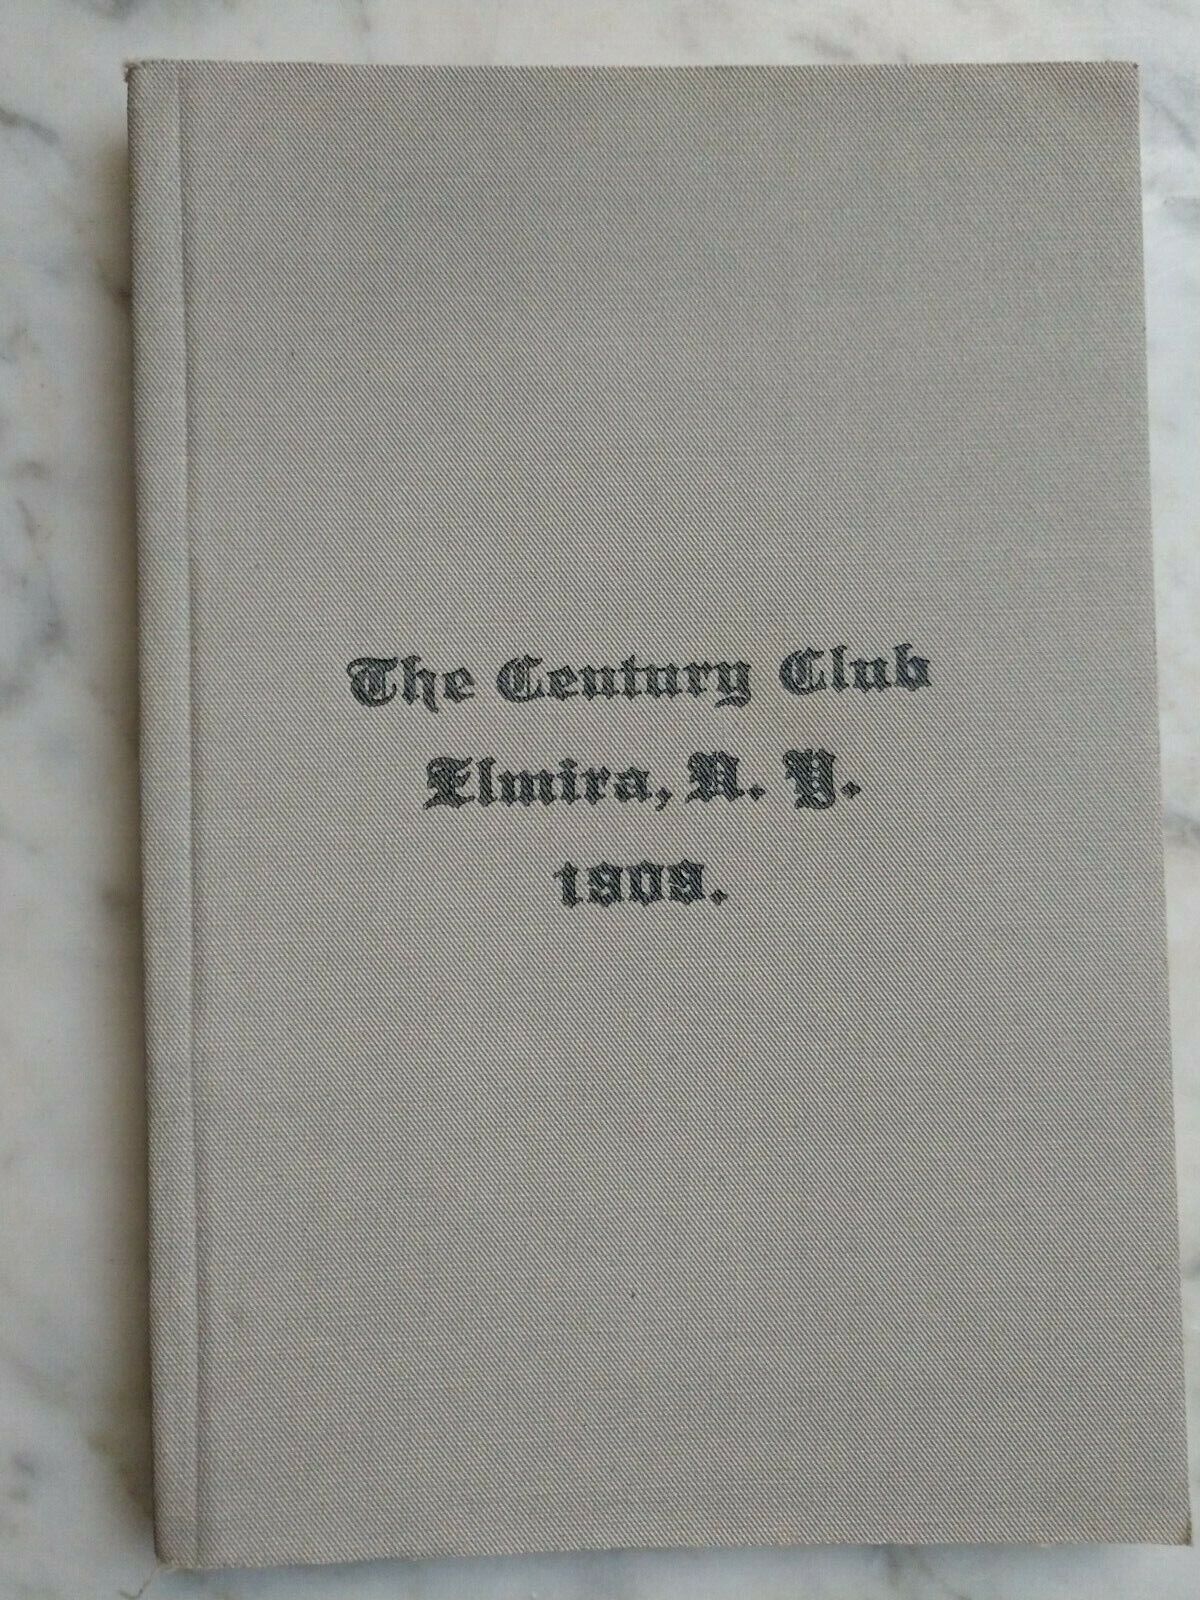 1909 The Century Club Elmira NY Social Club Book & Member List